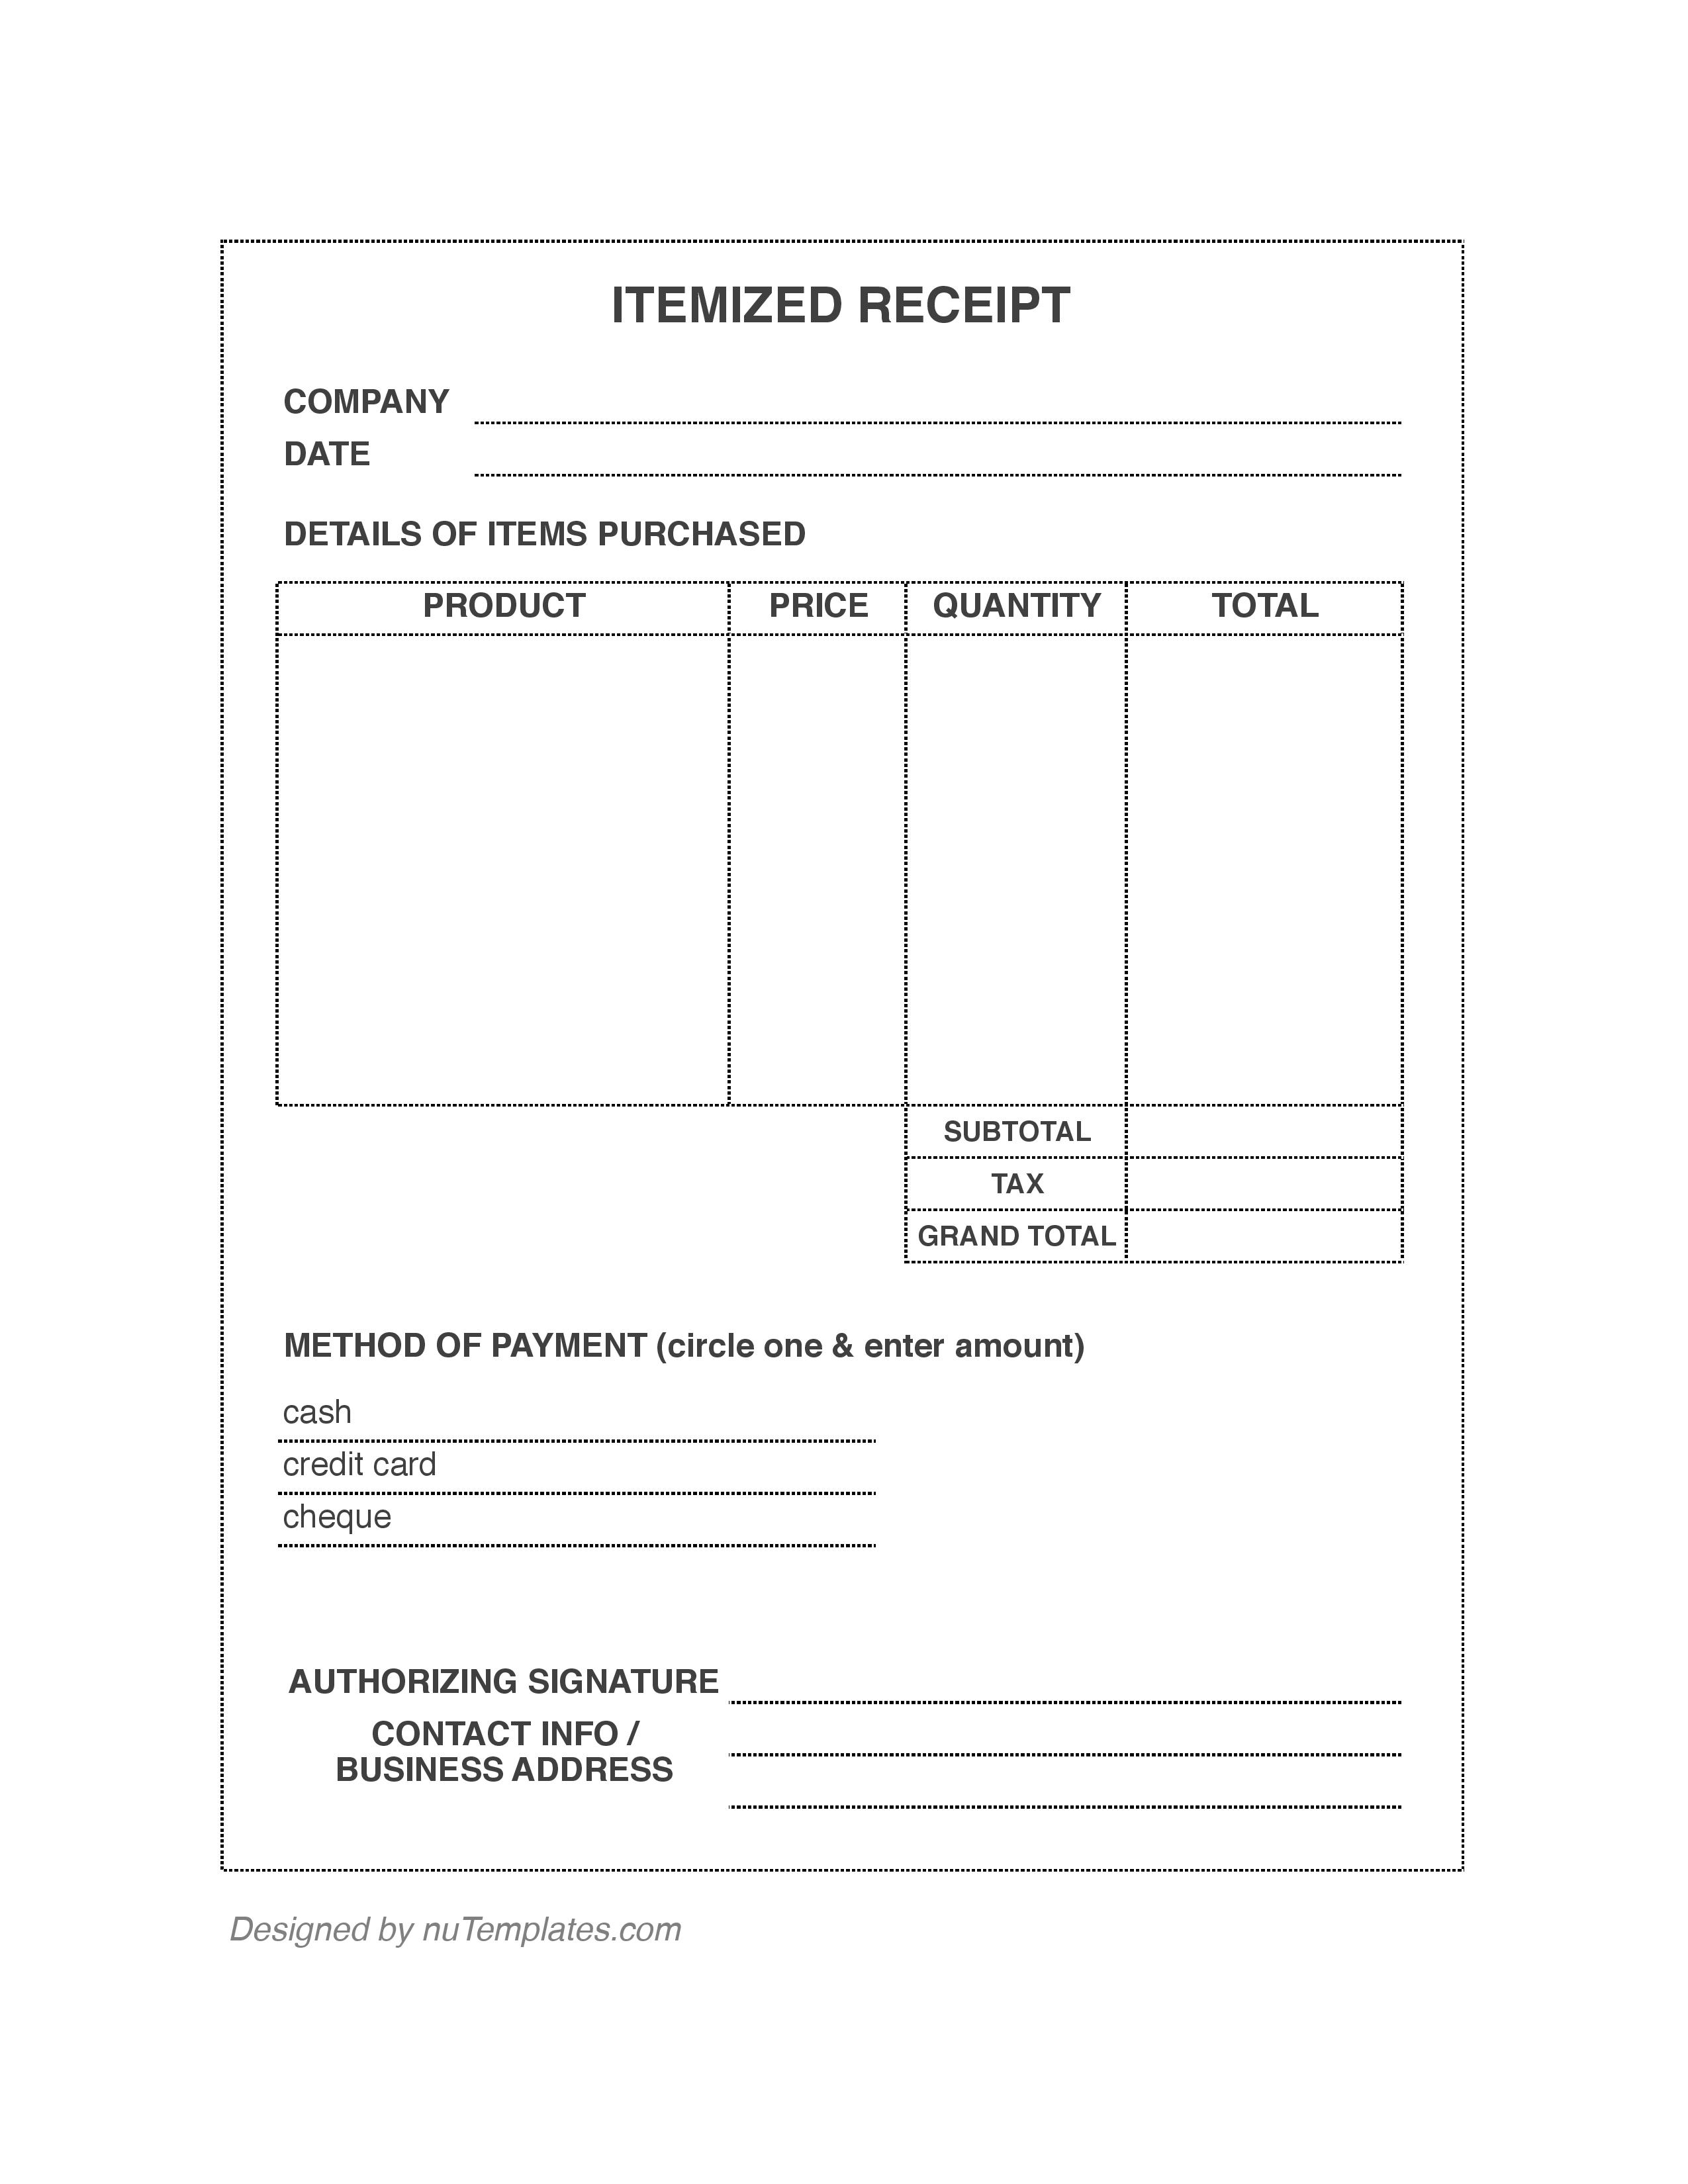 itemized-receipt-template-itemized-receipts-nutemplates